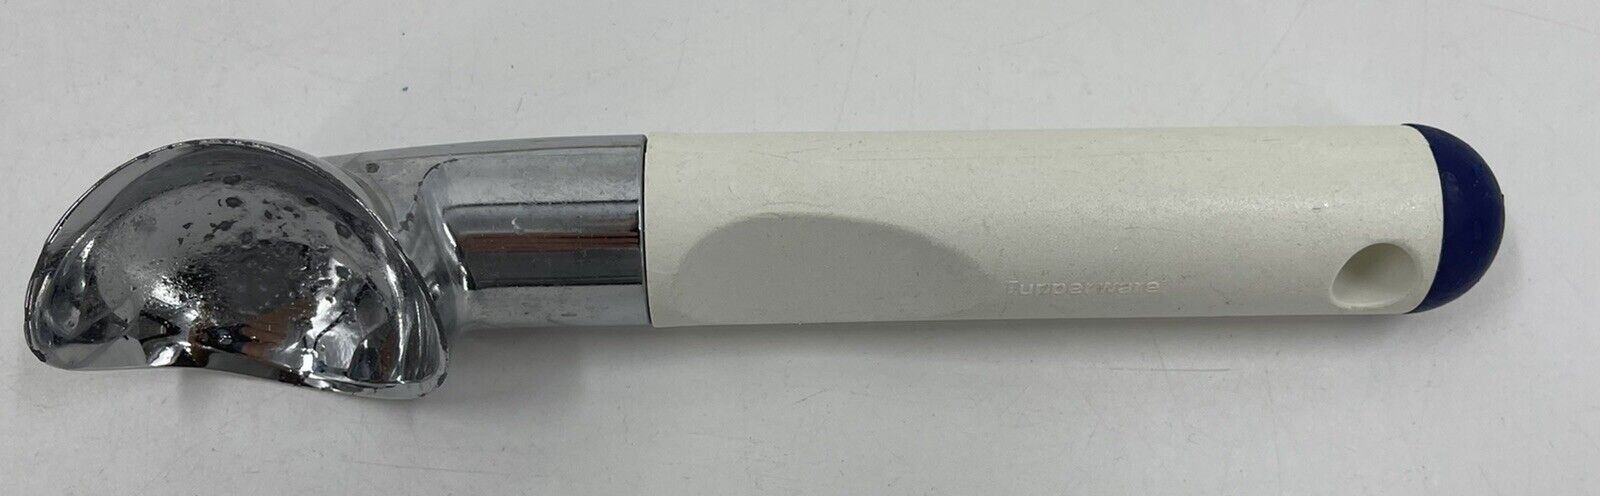 Tupperware Ice Cream Scoop Metal Blue& White Model #3045-2 *defect Pitting*